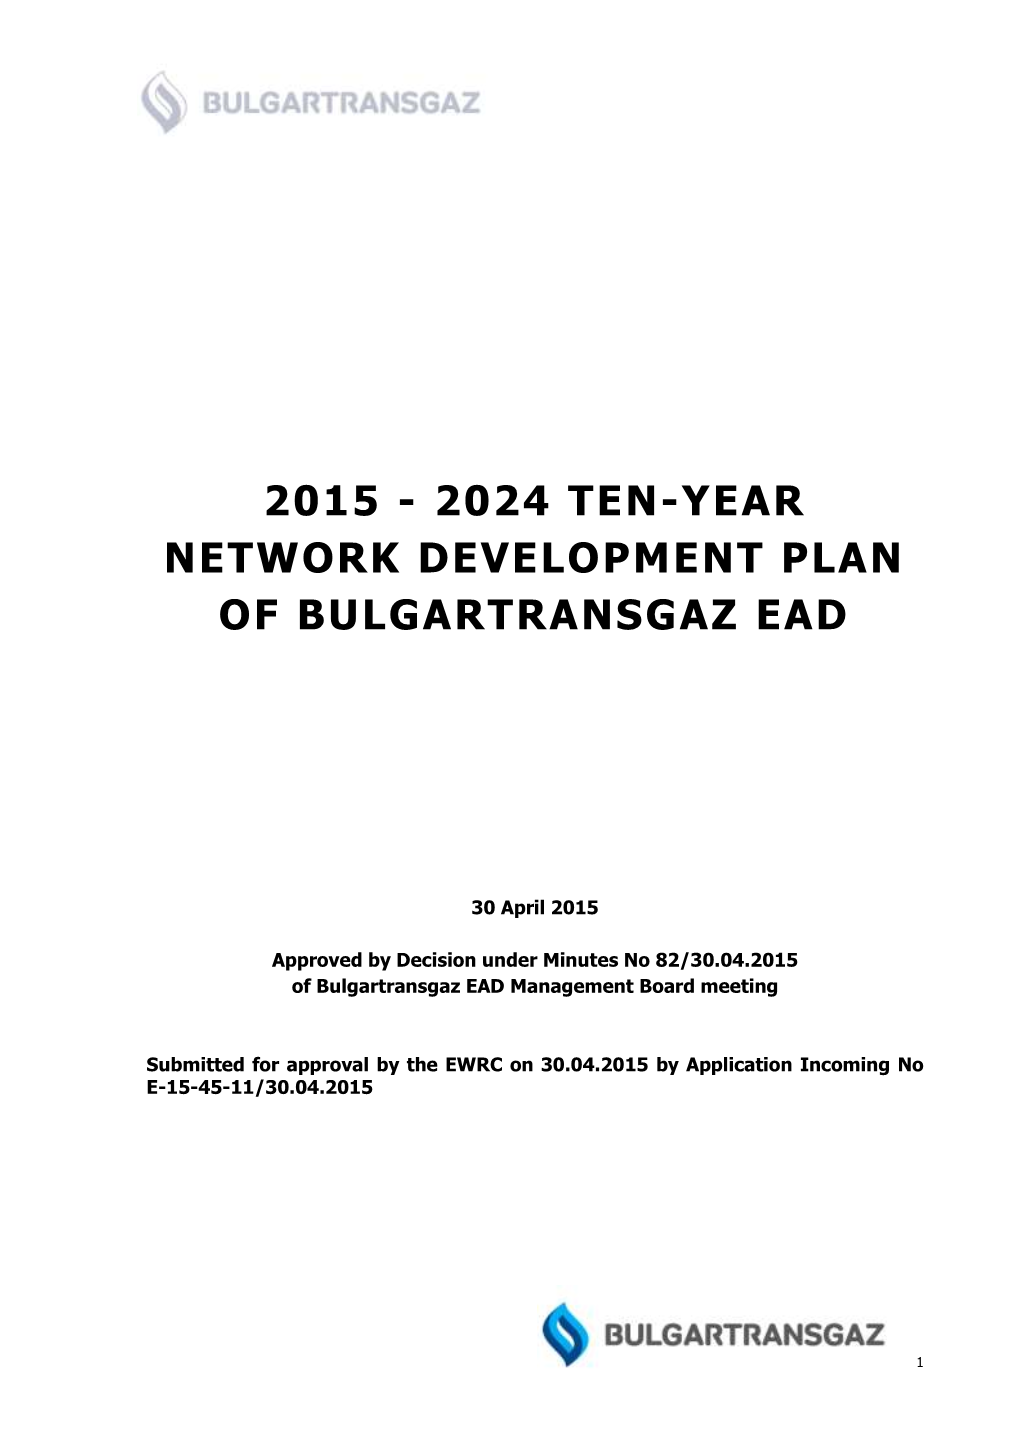 2015 - 2024 Ten-Year Network Development Plan of Bulgartransgaz Ead